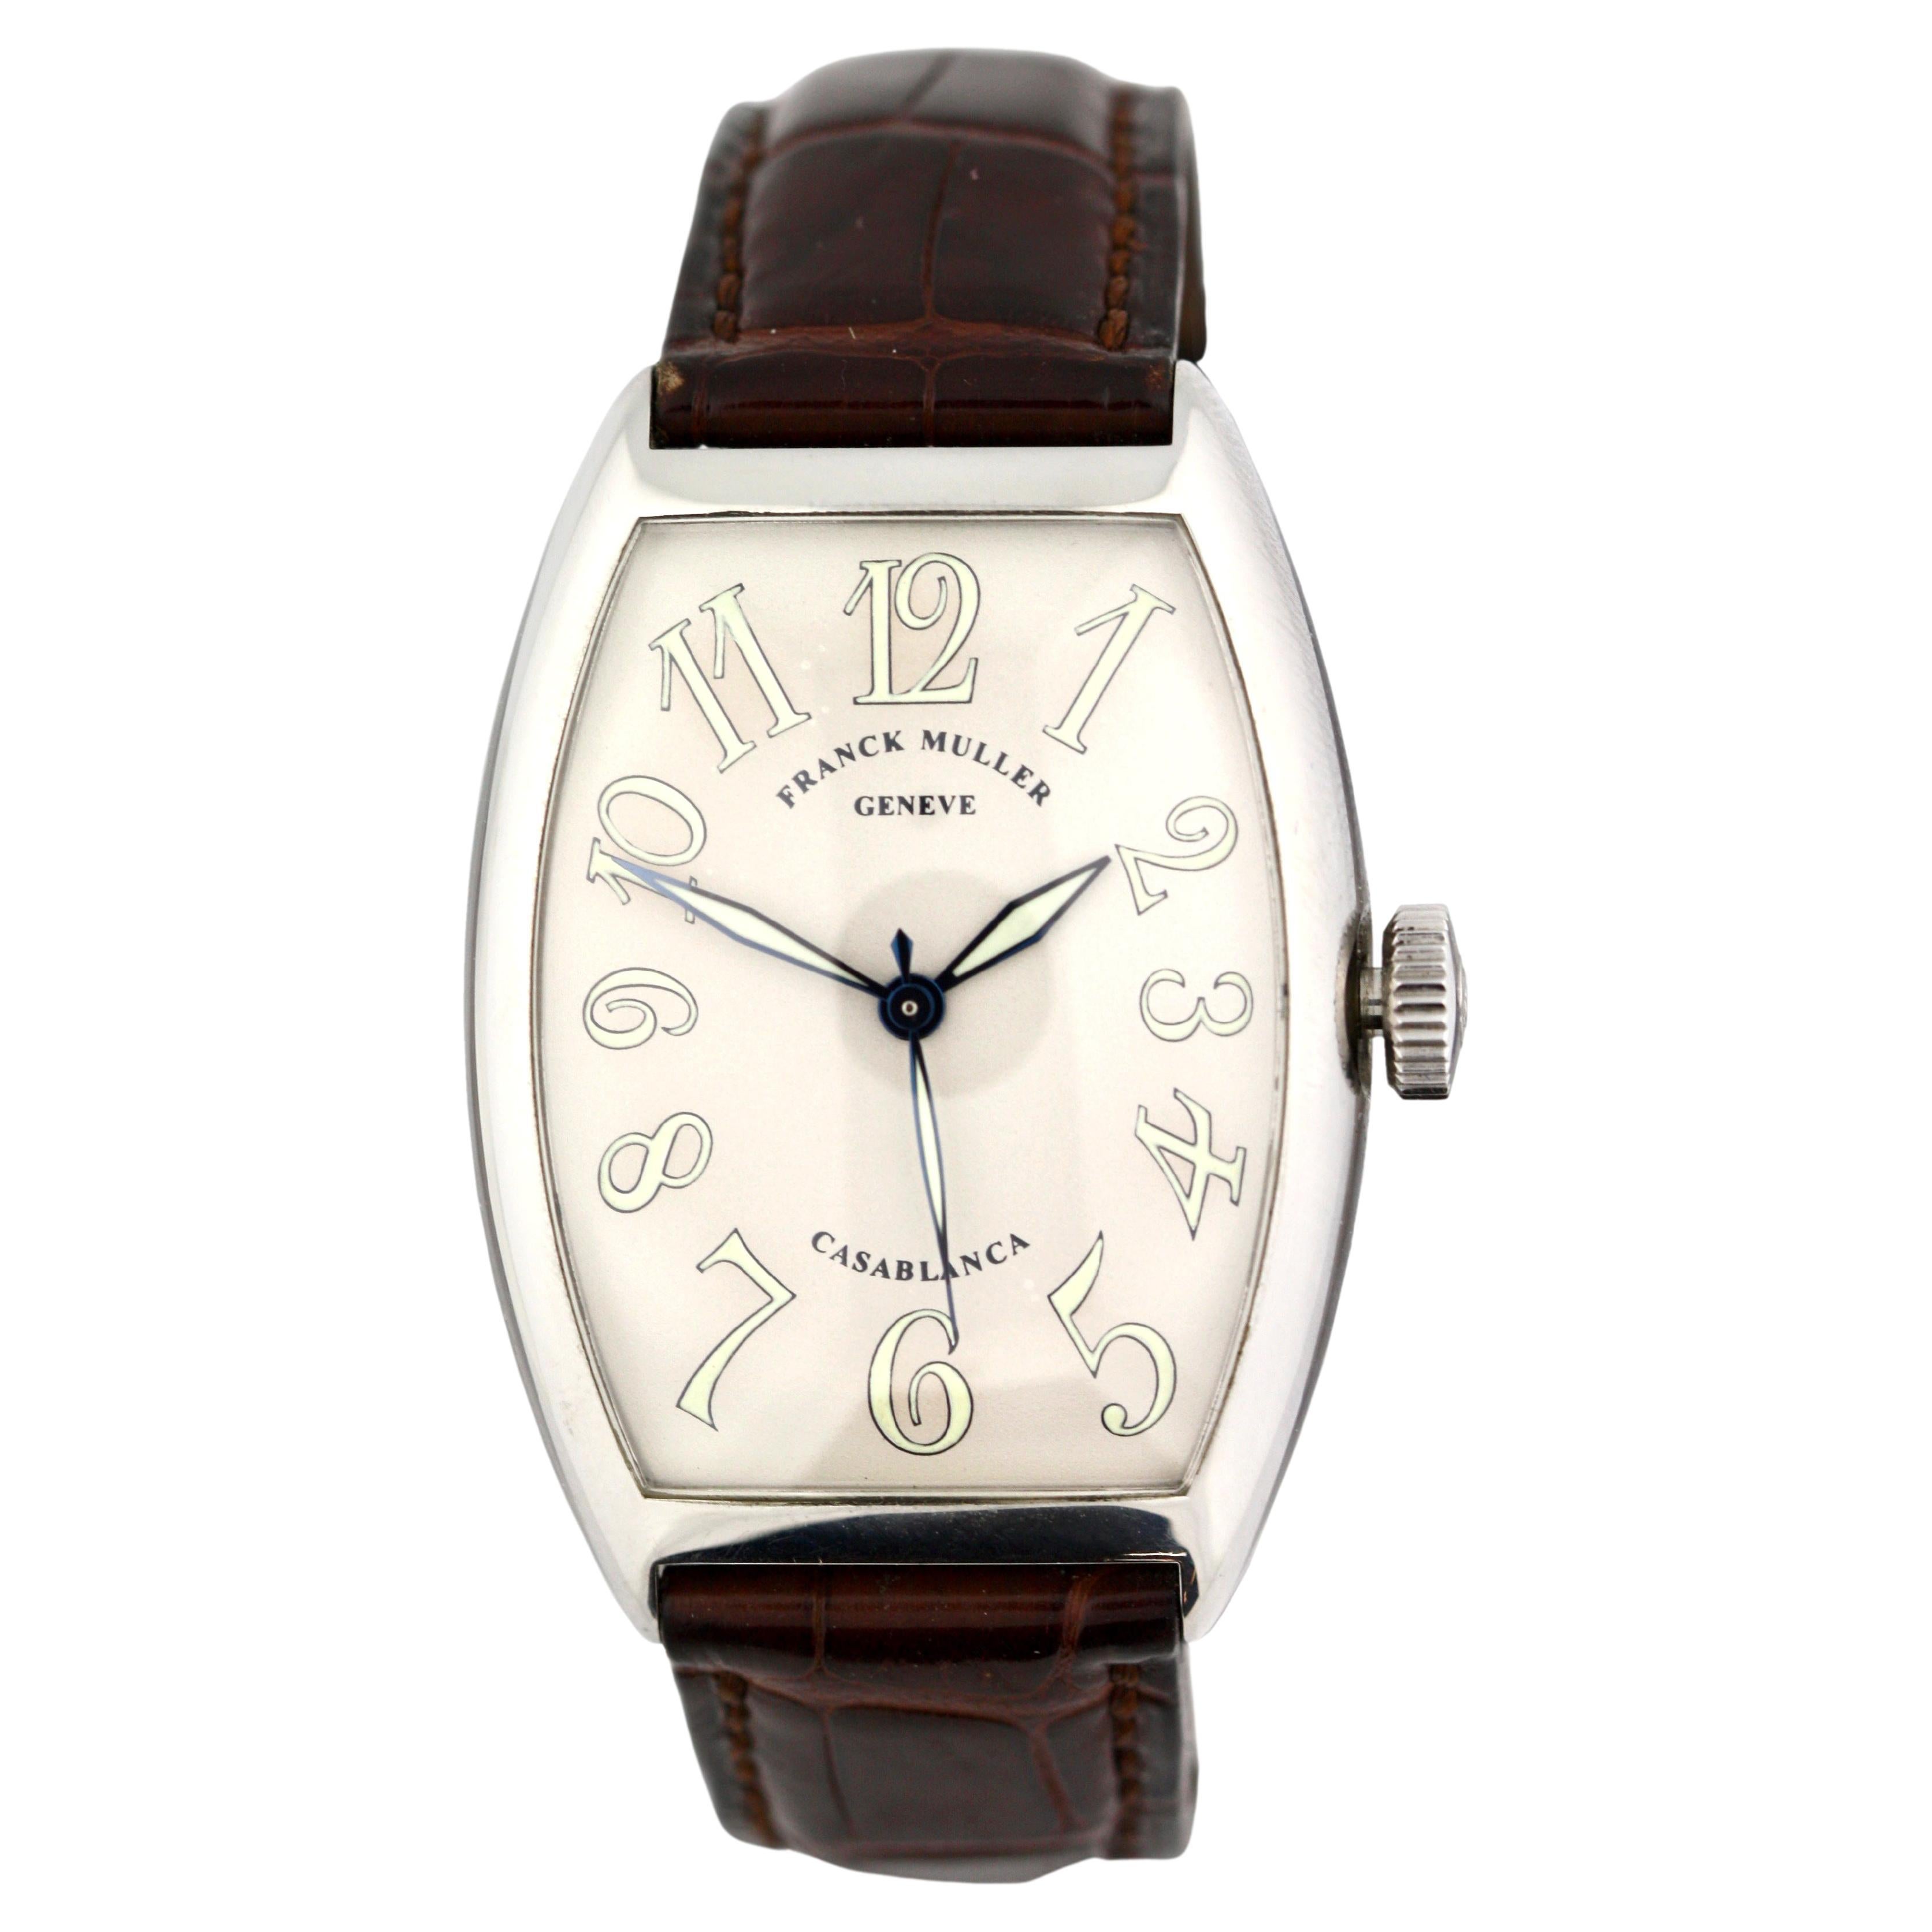 Franck Muller Casablanca, Ref. 5850 Stainless Steel Wristwatch